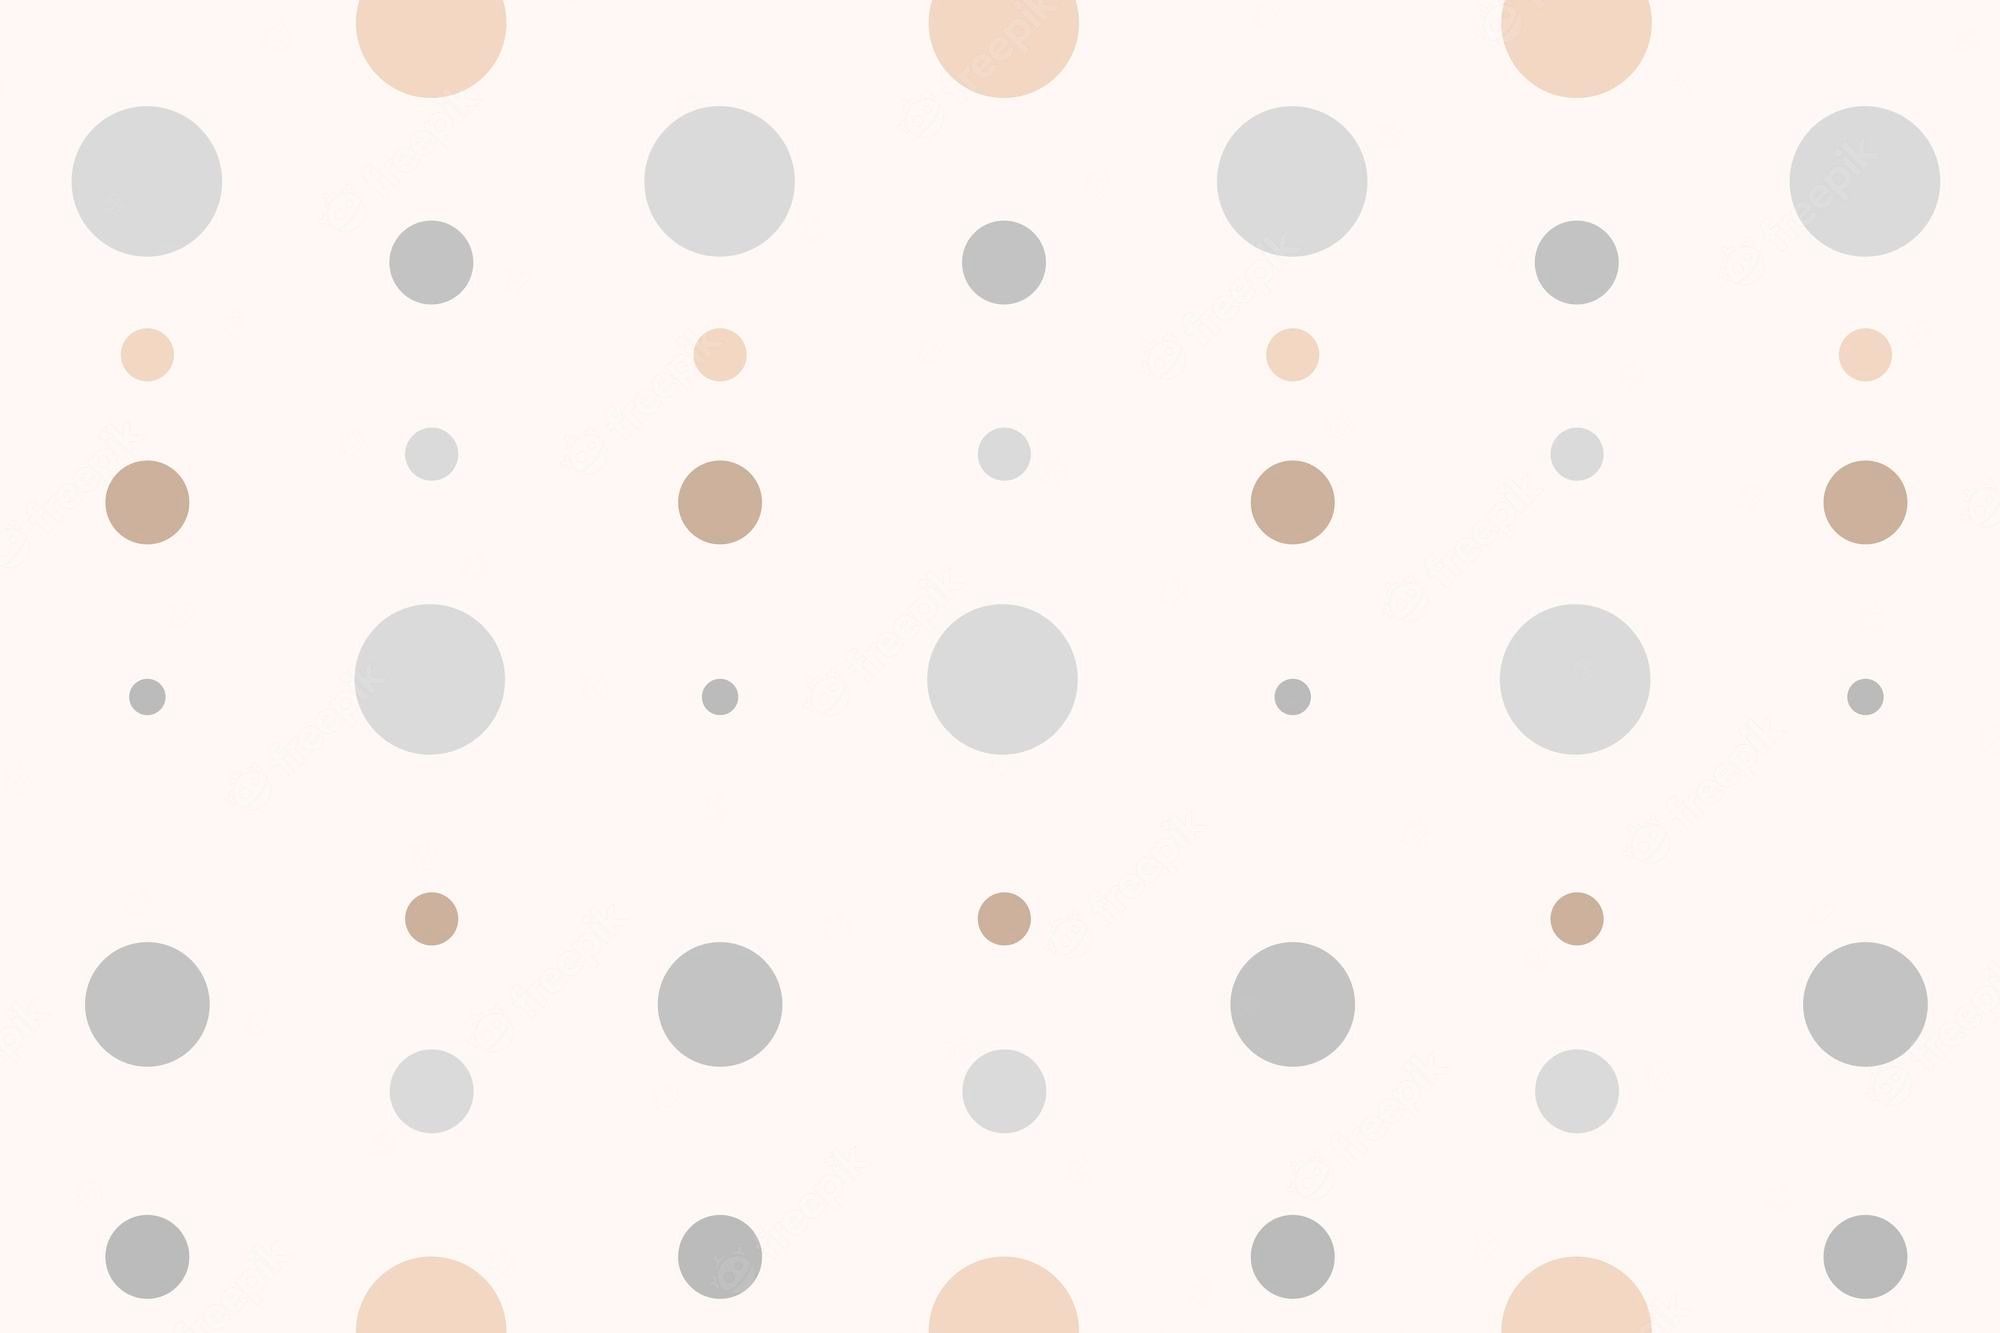 Free Vector. Aesthetic background, polka dot pattern in cream vector